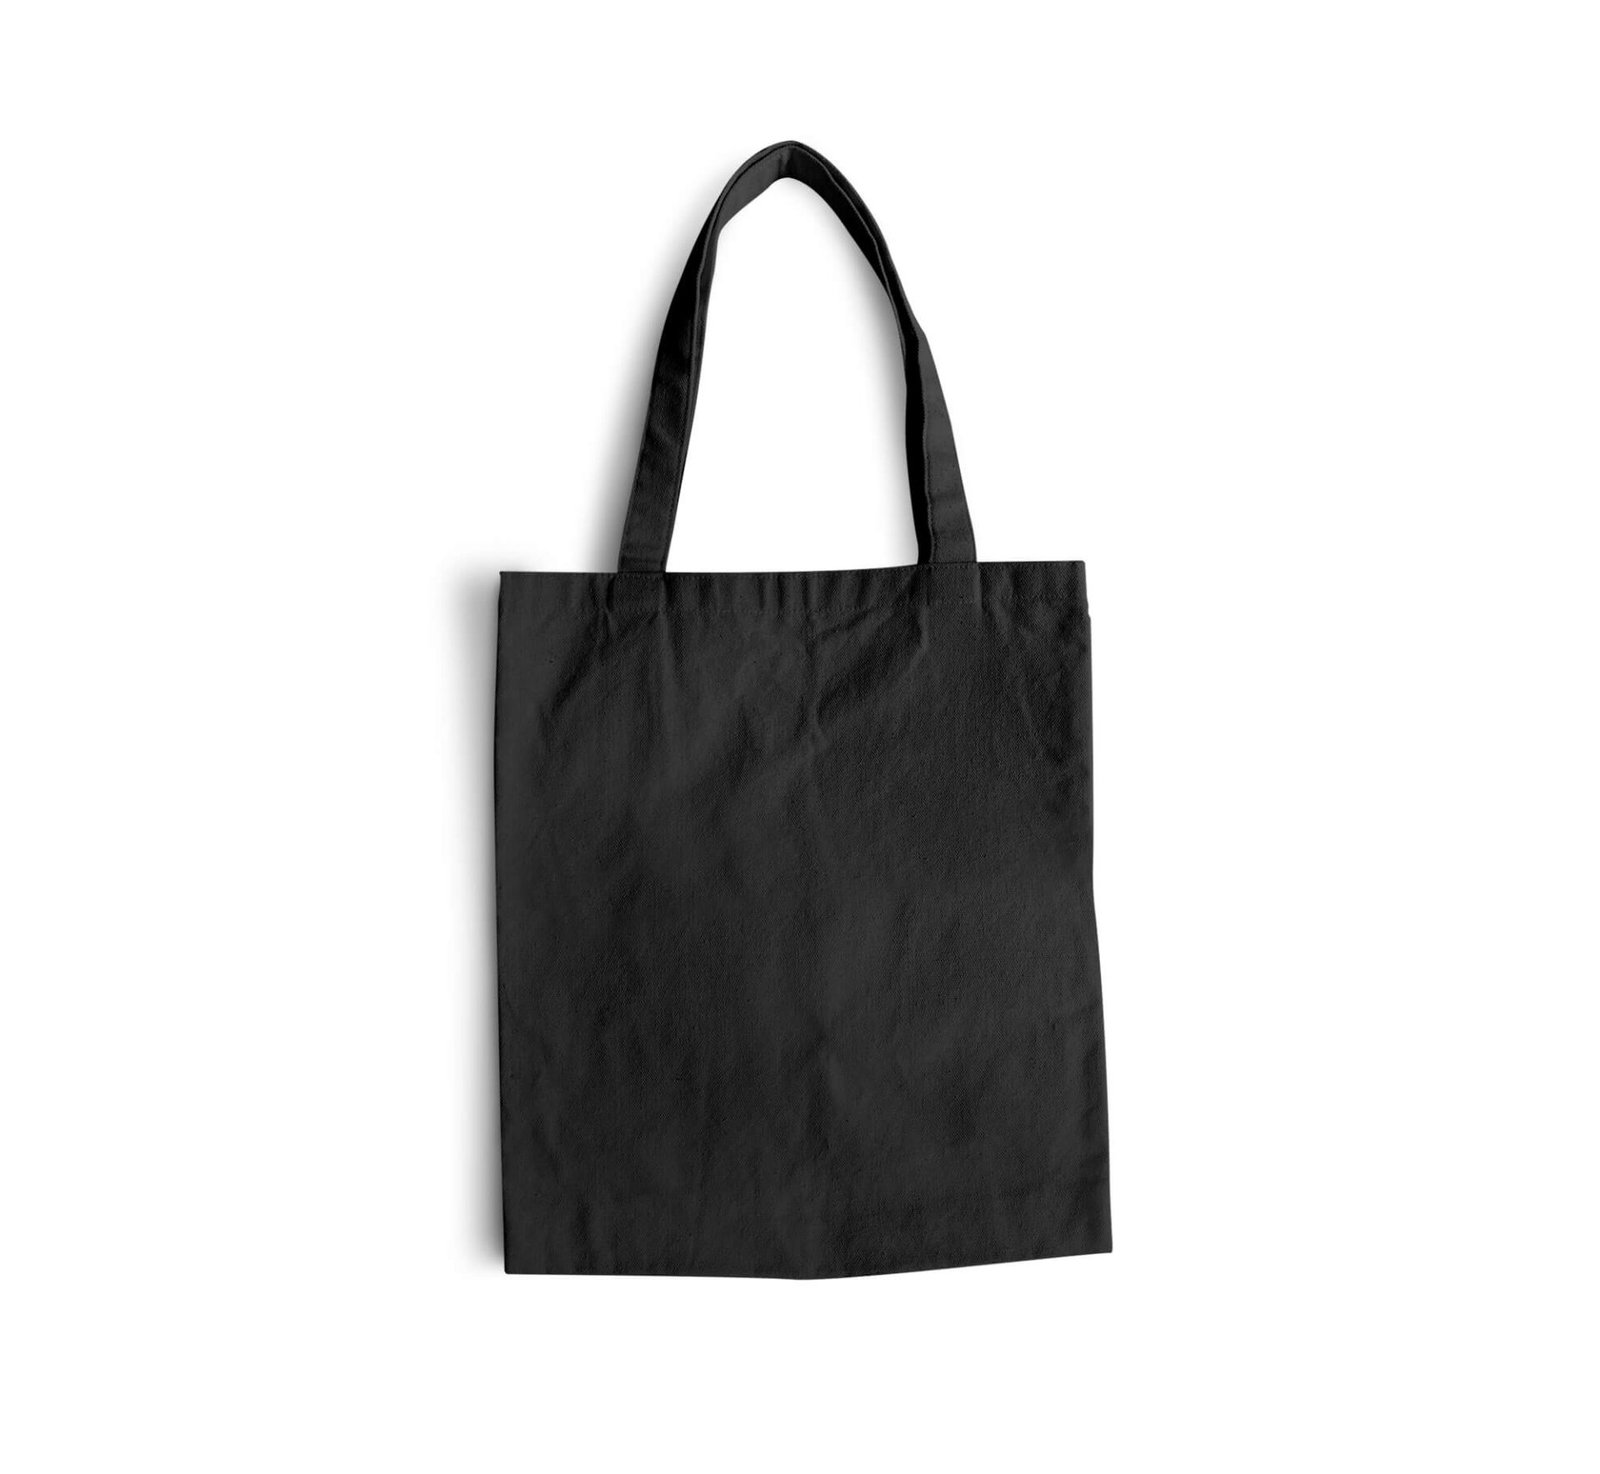 Free Black Tote Bag Mockup PSD Template - Mockup Den